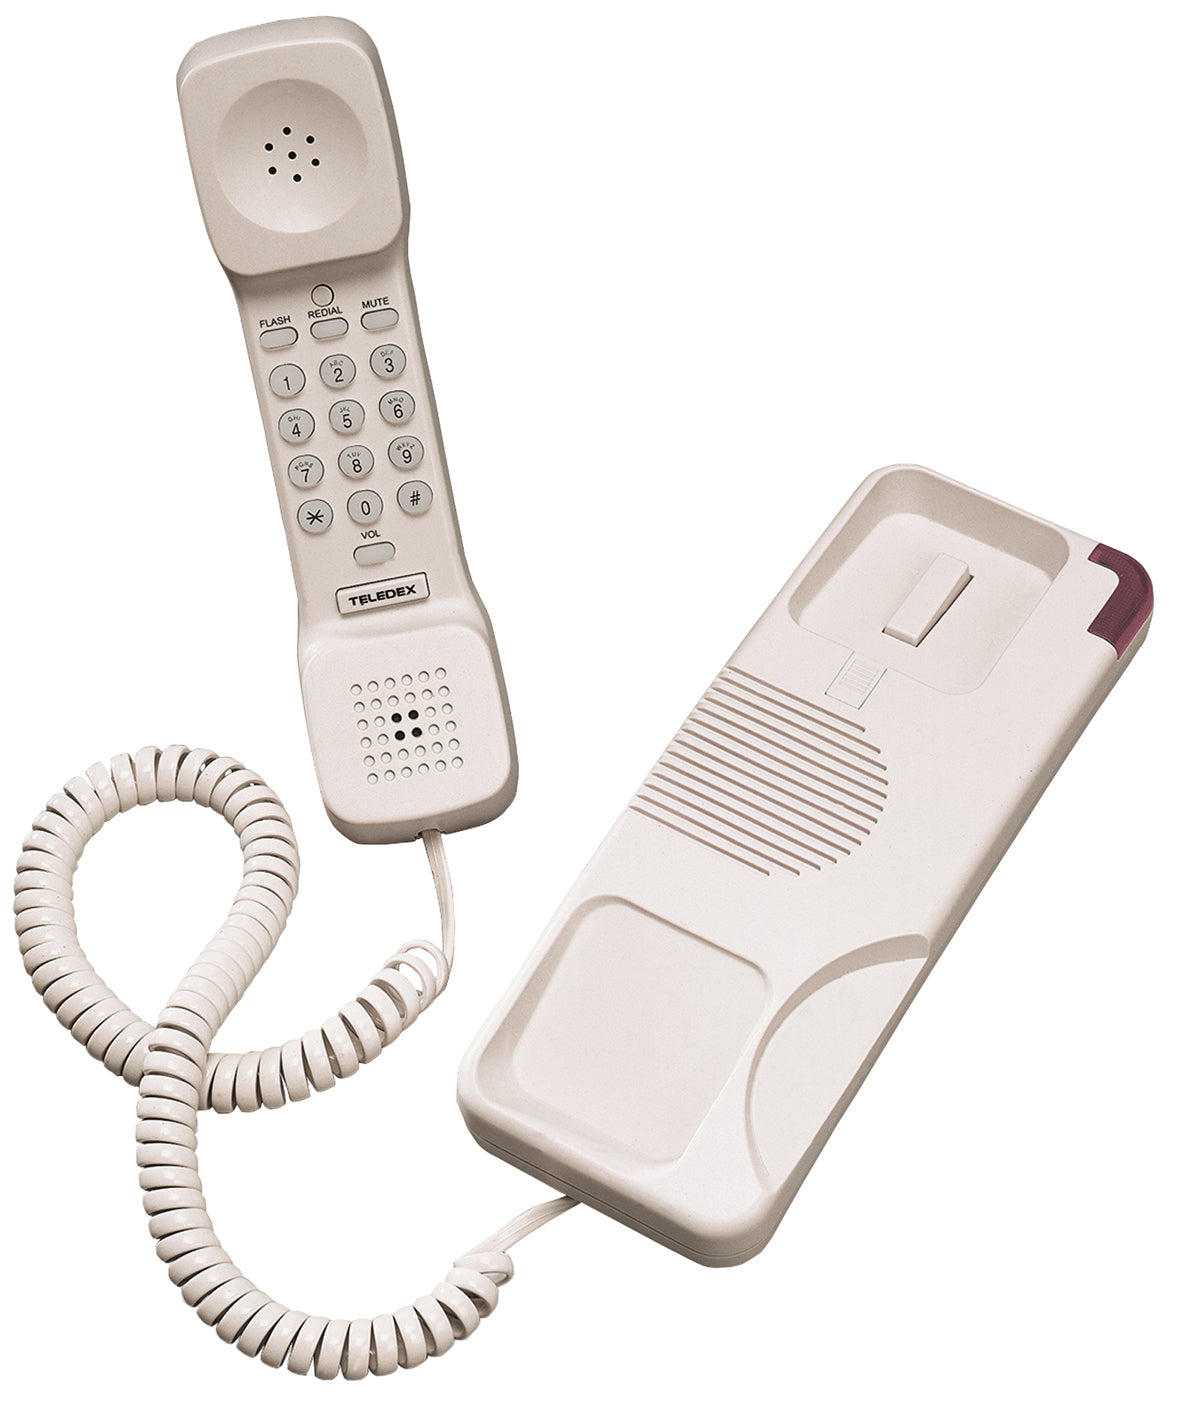 Cetis OPL69119 Teledex Opal Trimline Telephone 1 MWL Ash